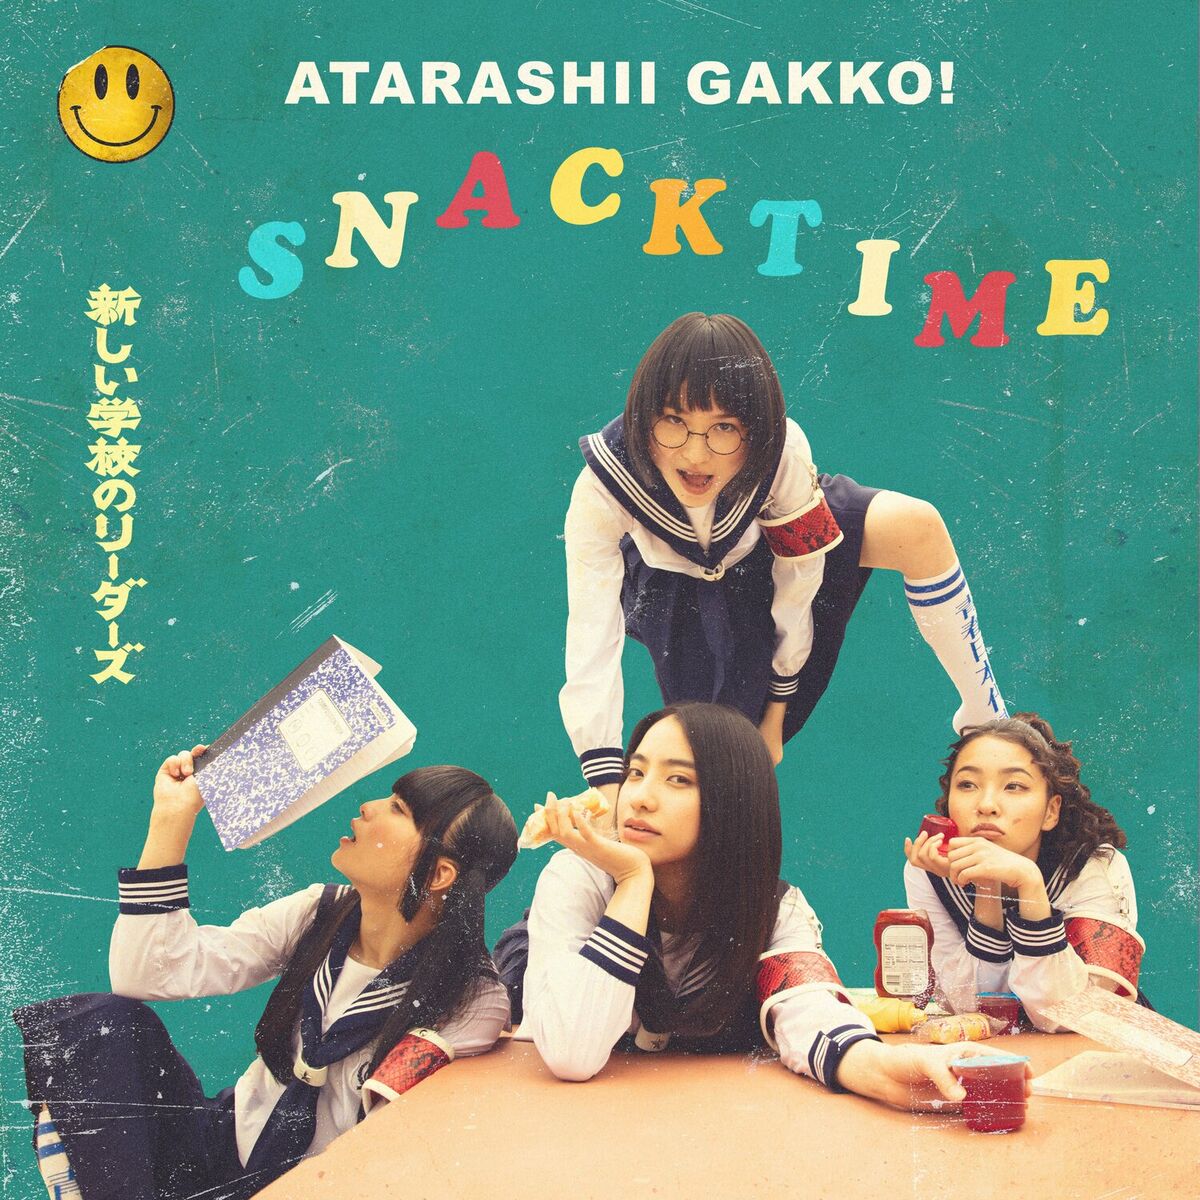 ATARASHII GAKKO!: albums, songs, playlists | Listen on Deezer